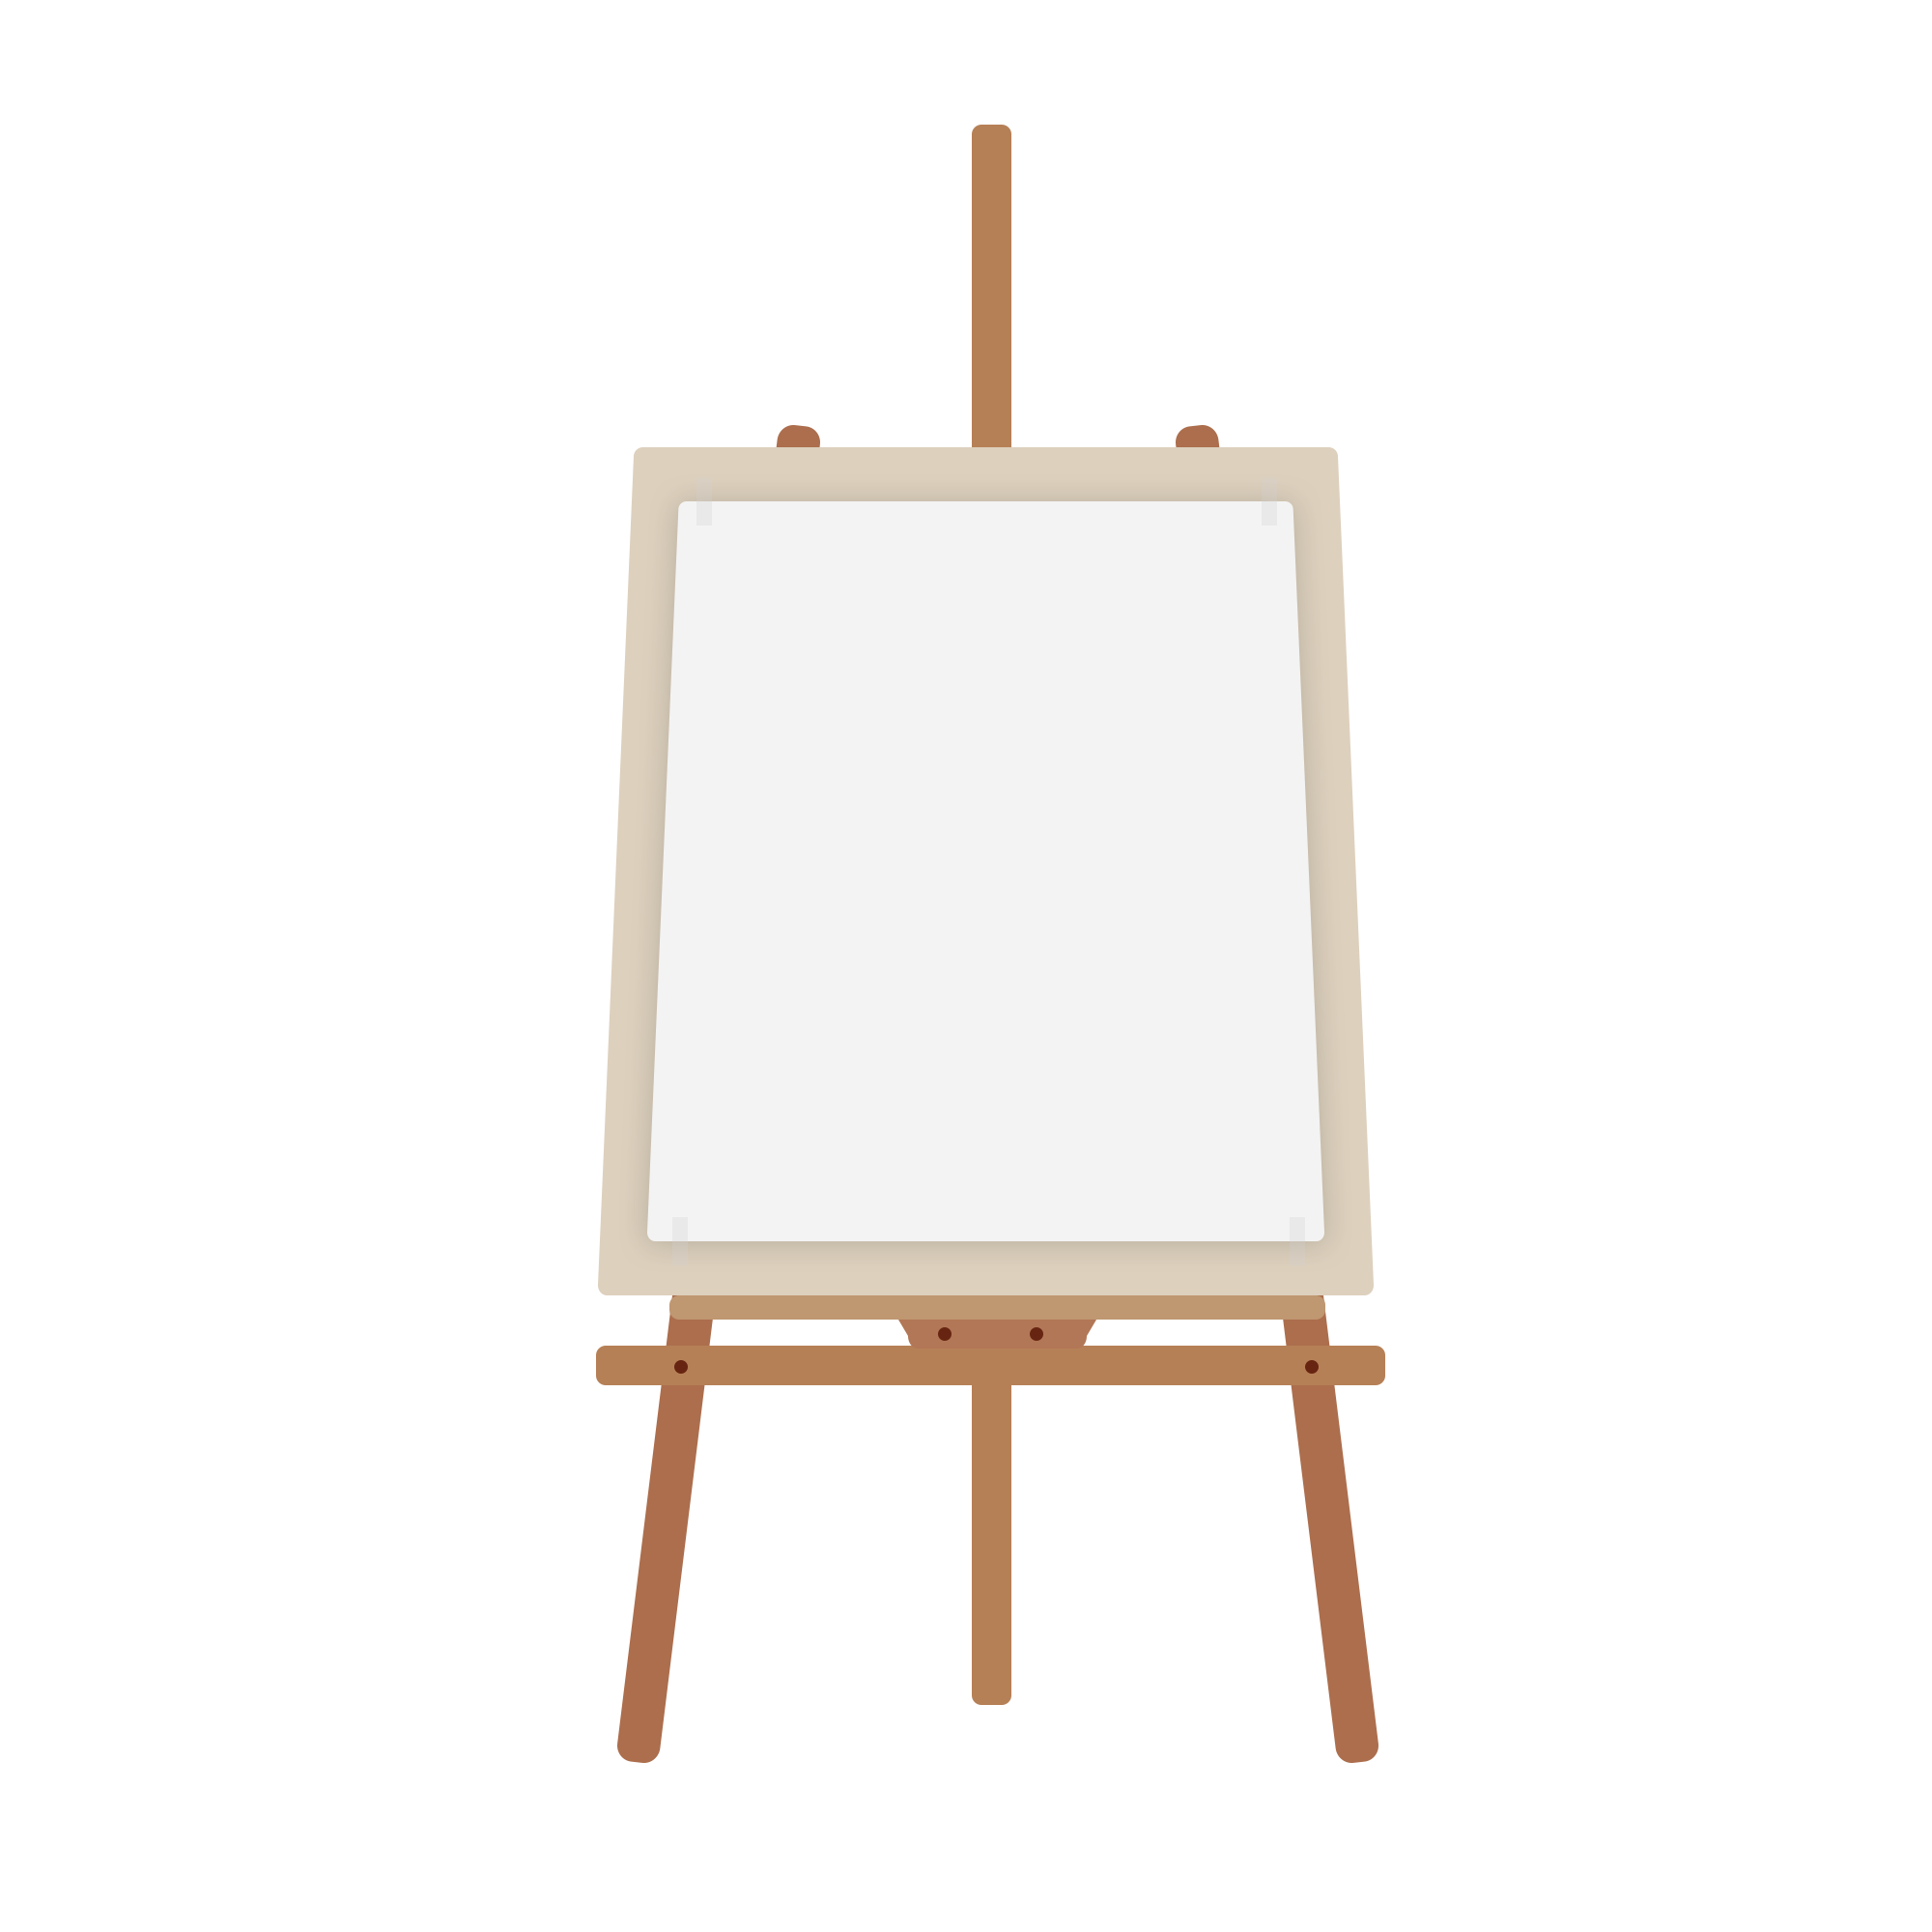 Drawing Board PNG Image